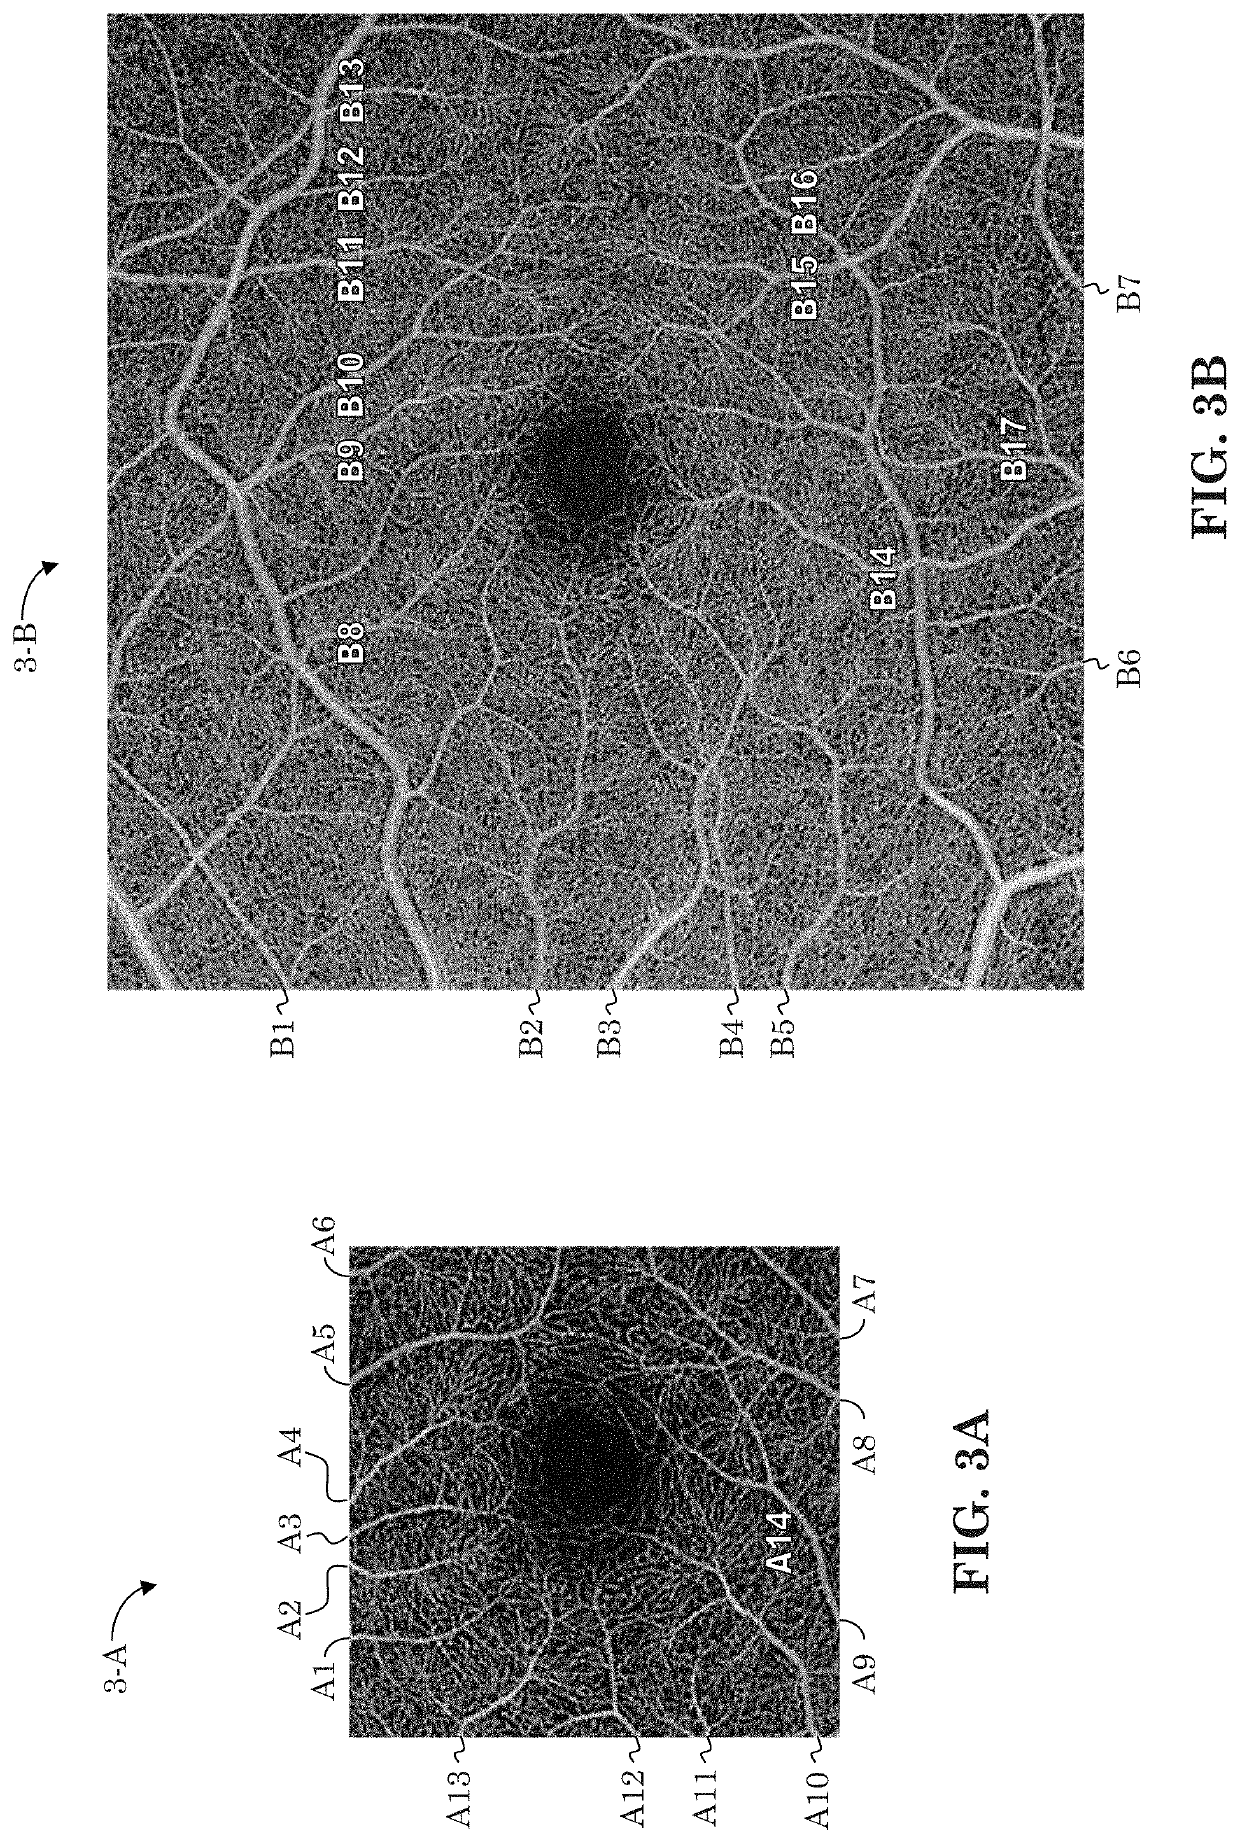 Oct-based retinal artery/vein classification